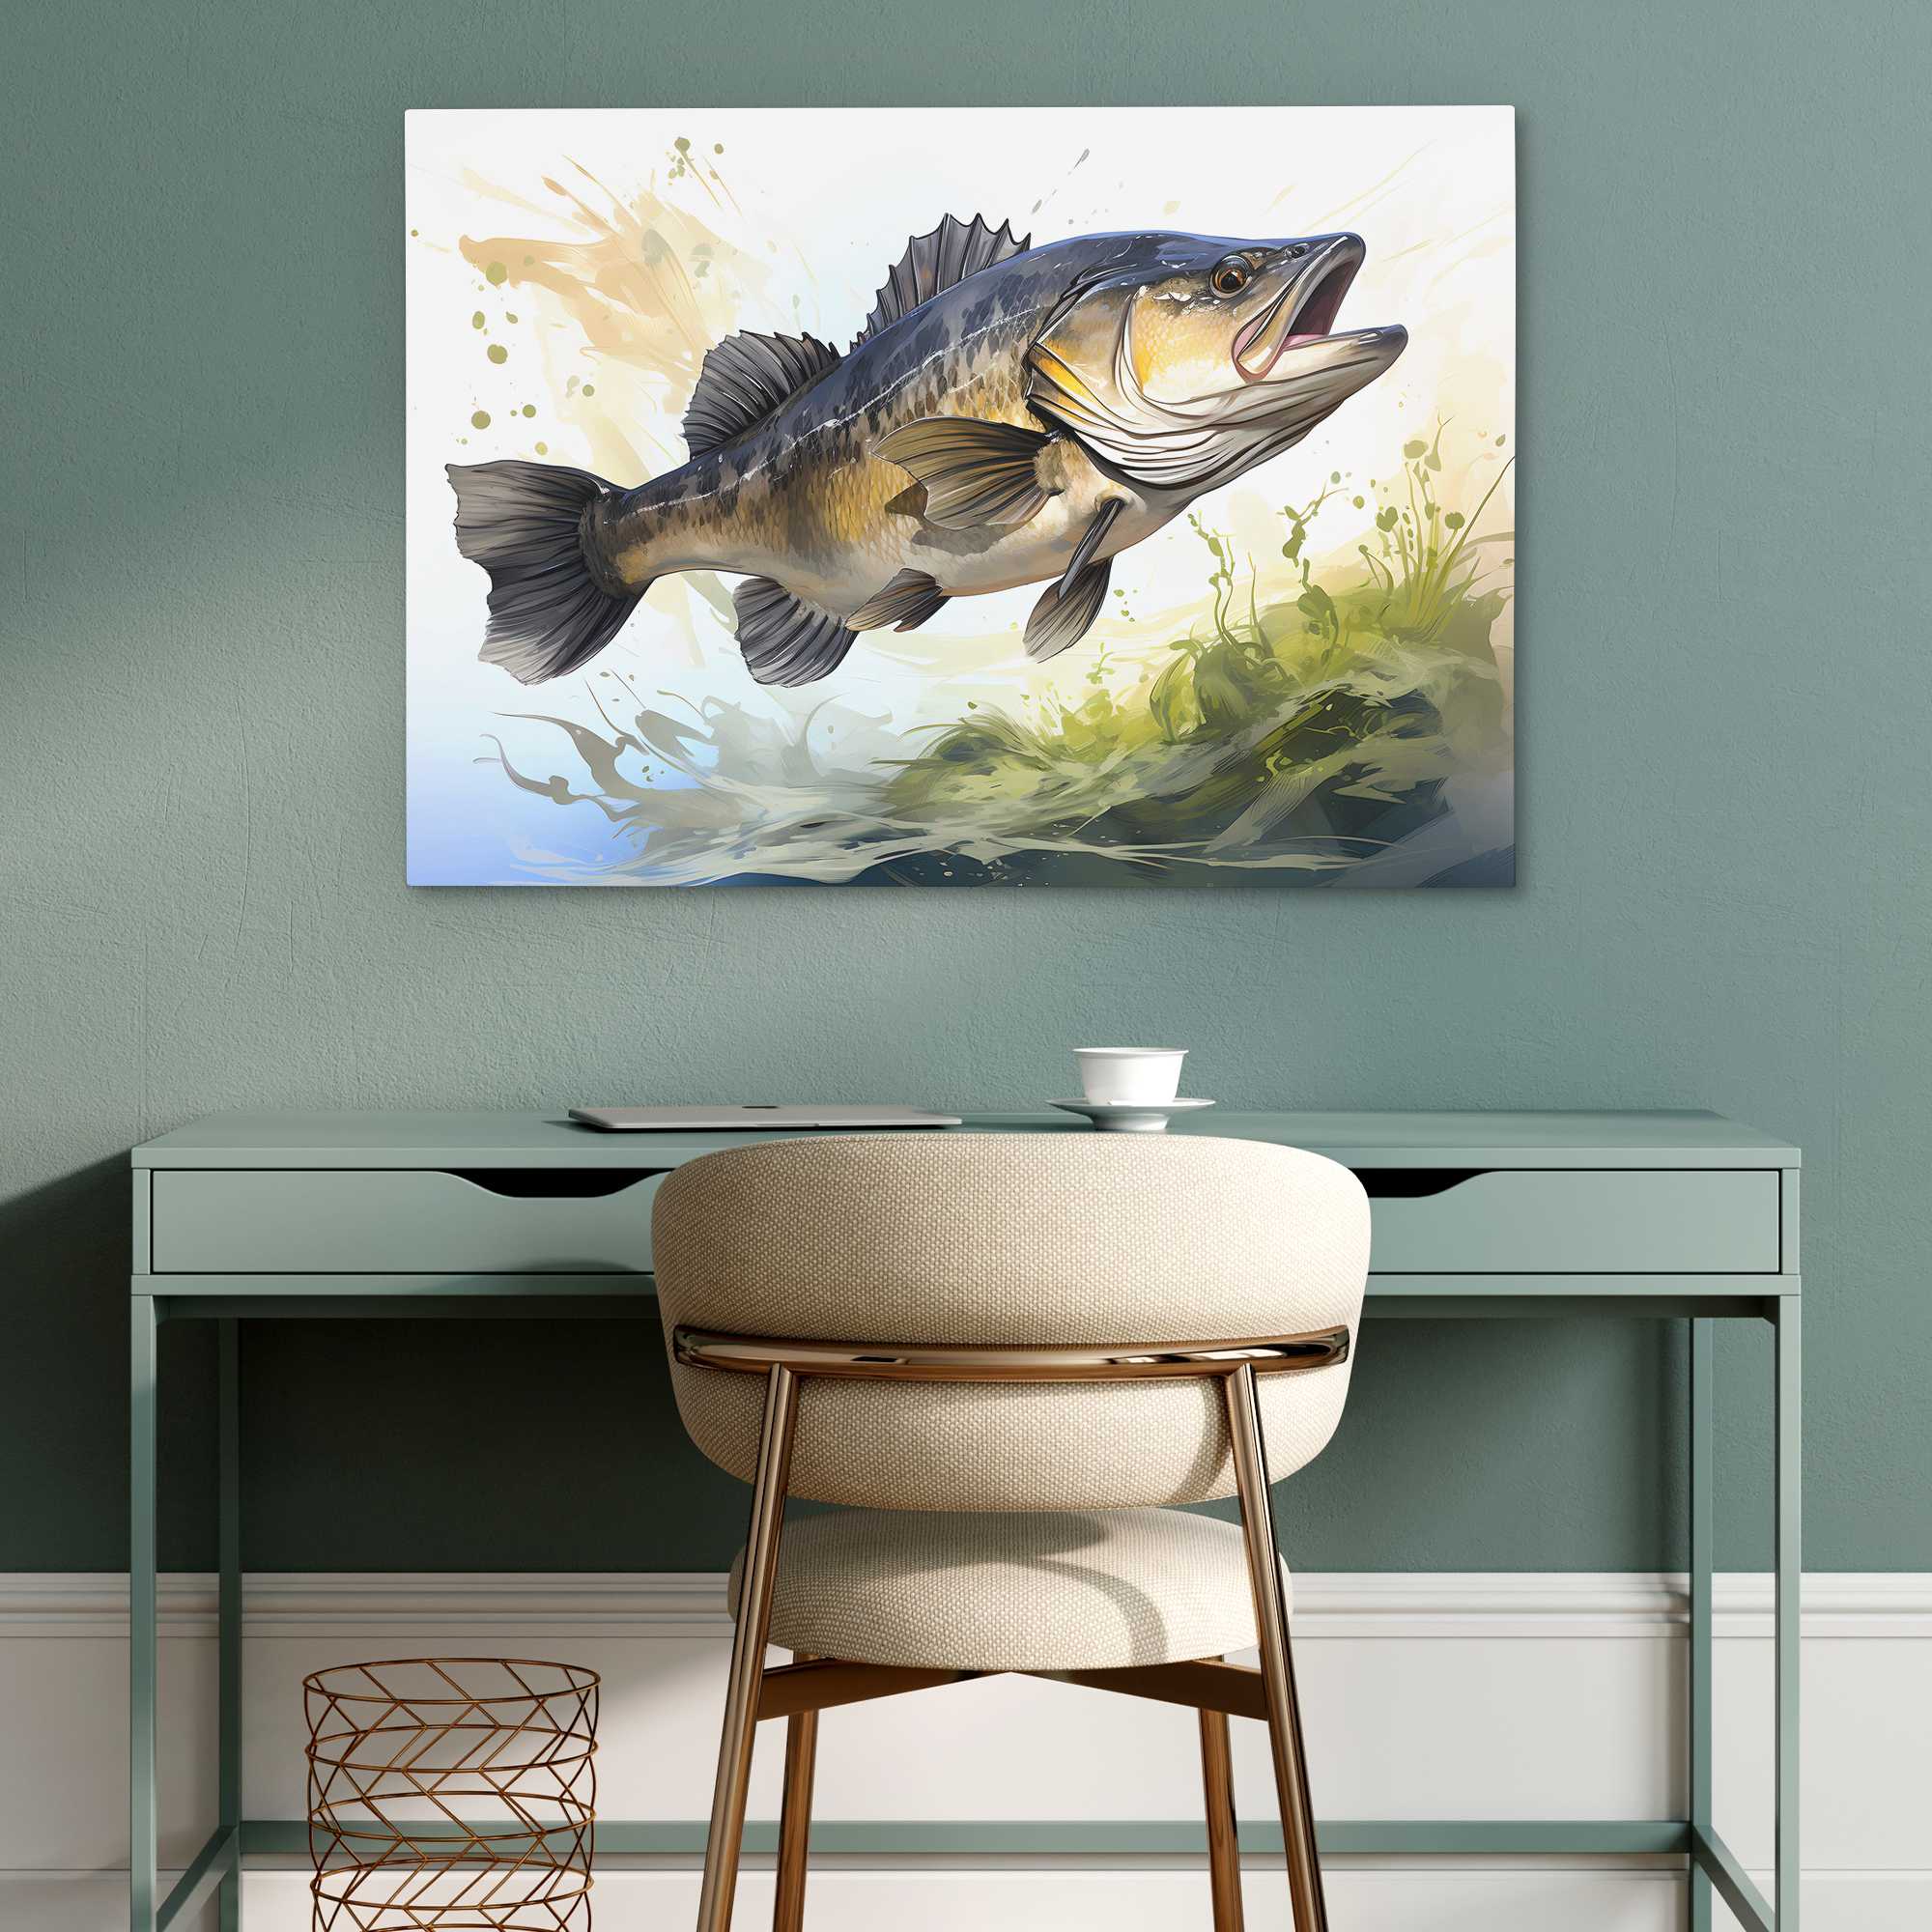 Bass Fishing Set Wall Art: Canvas Prints, Art Prints & Framed Canvas